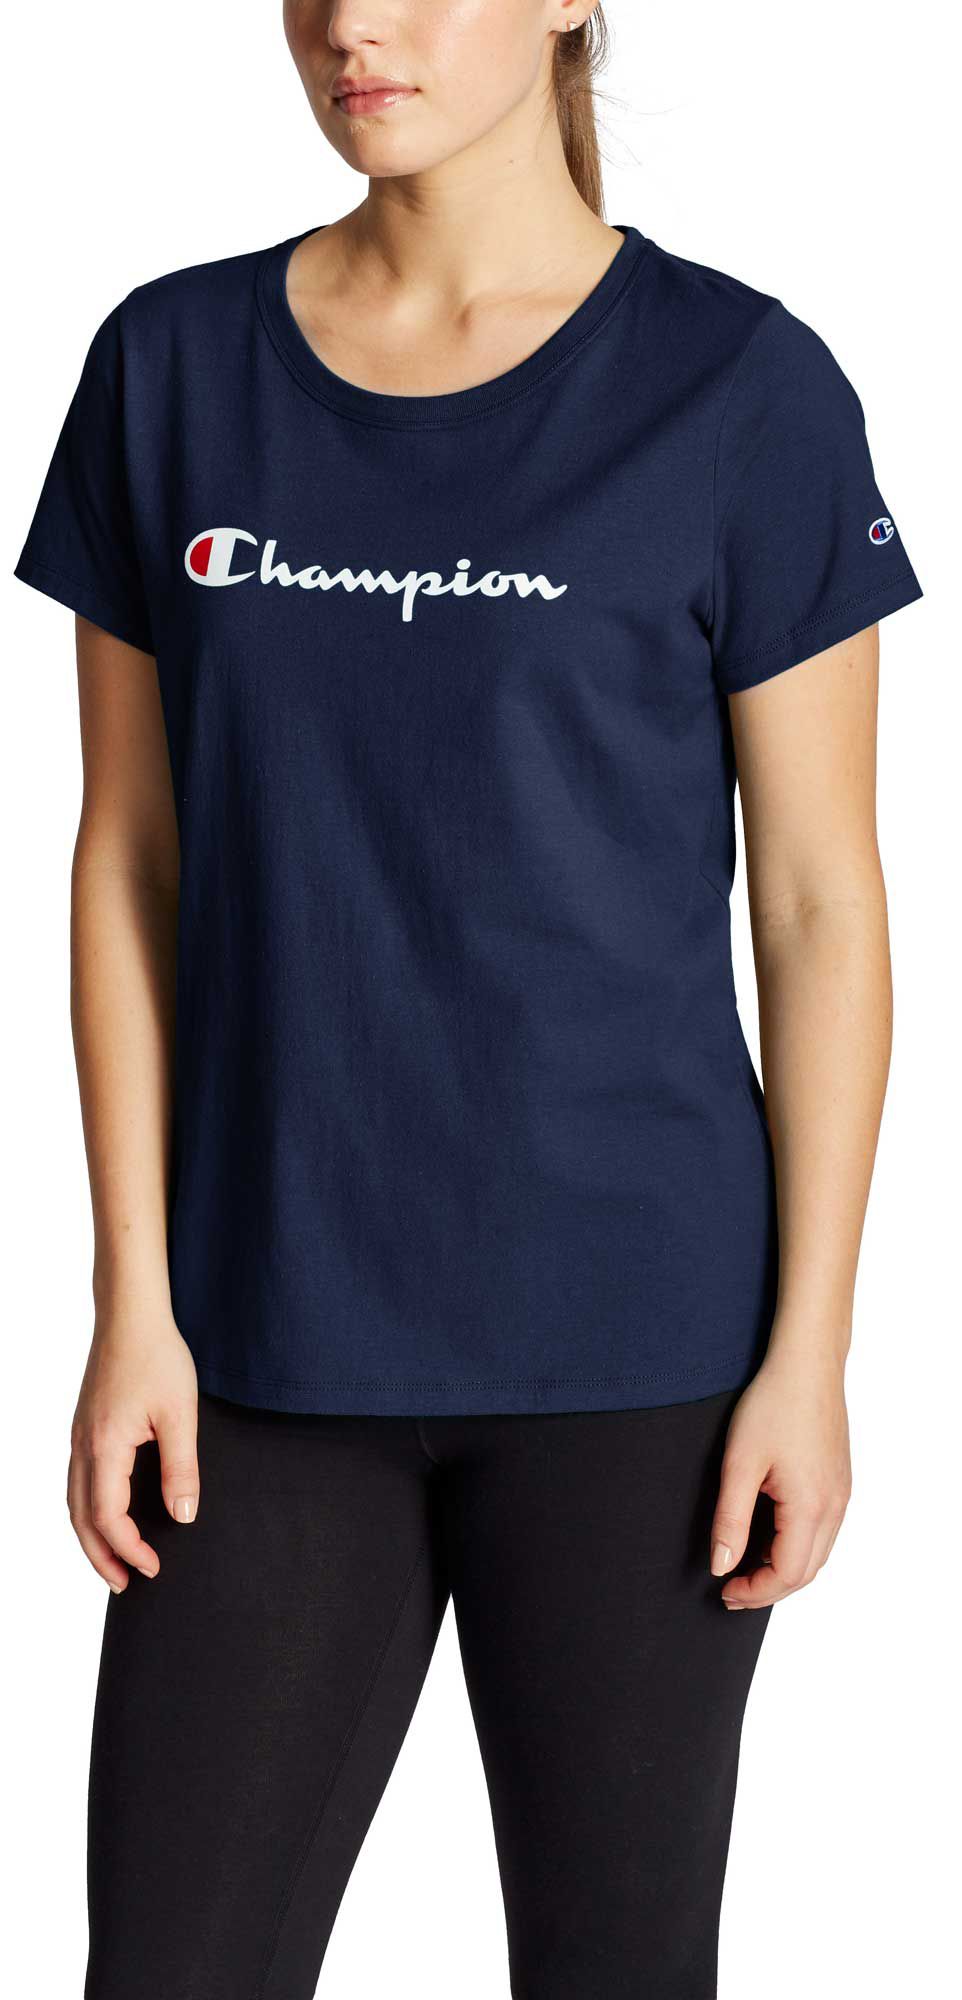 women's champion t shirt